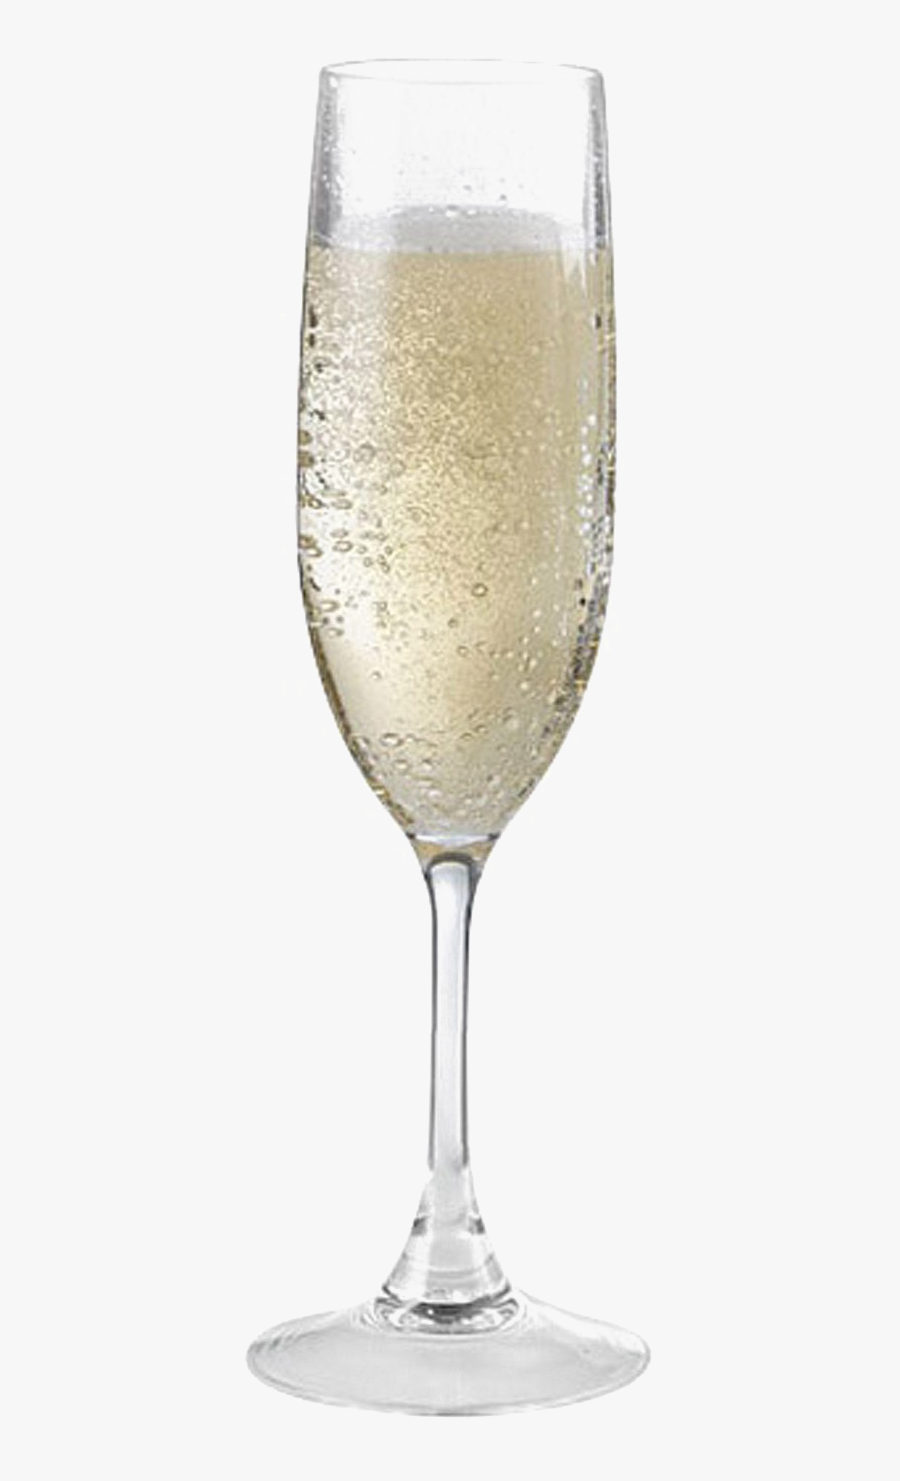 Champagne Flute Glass Png, Transparent Clipart